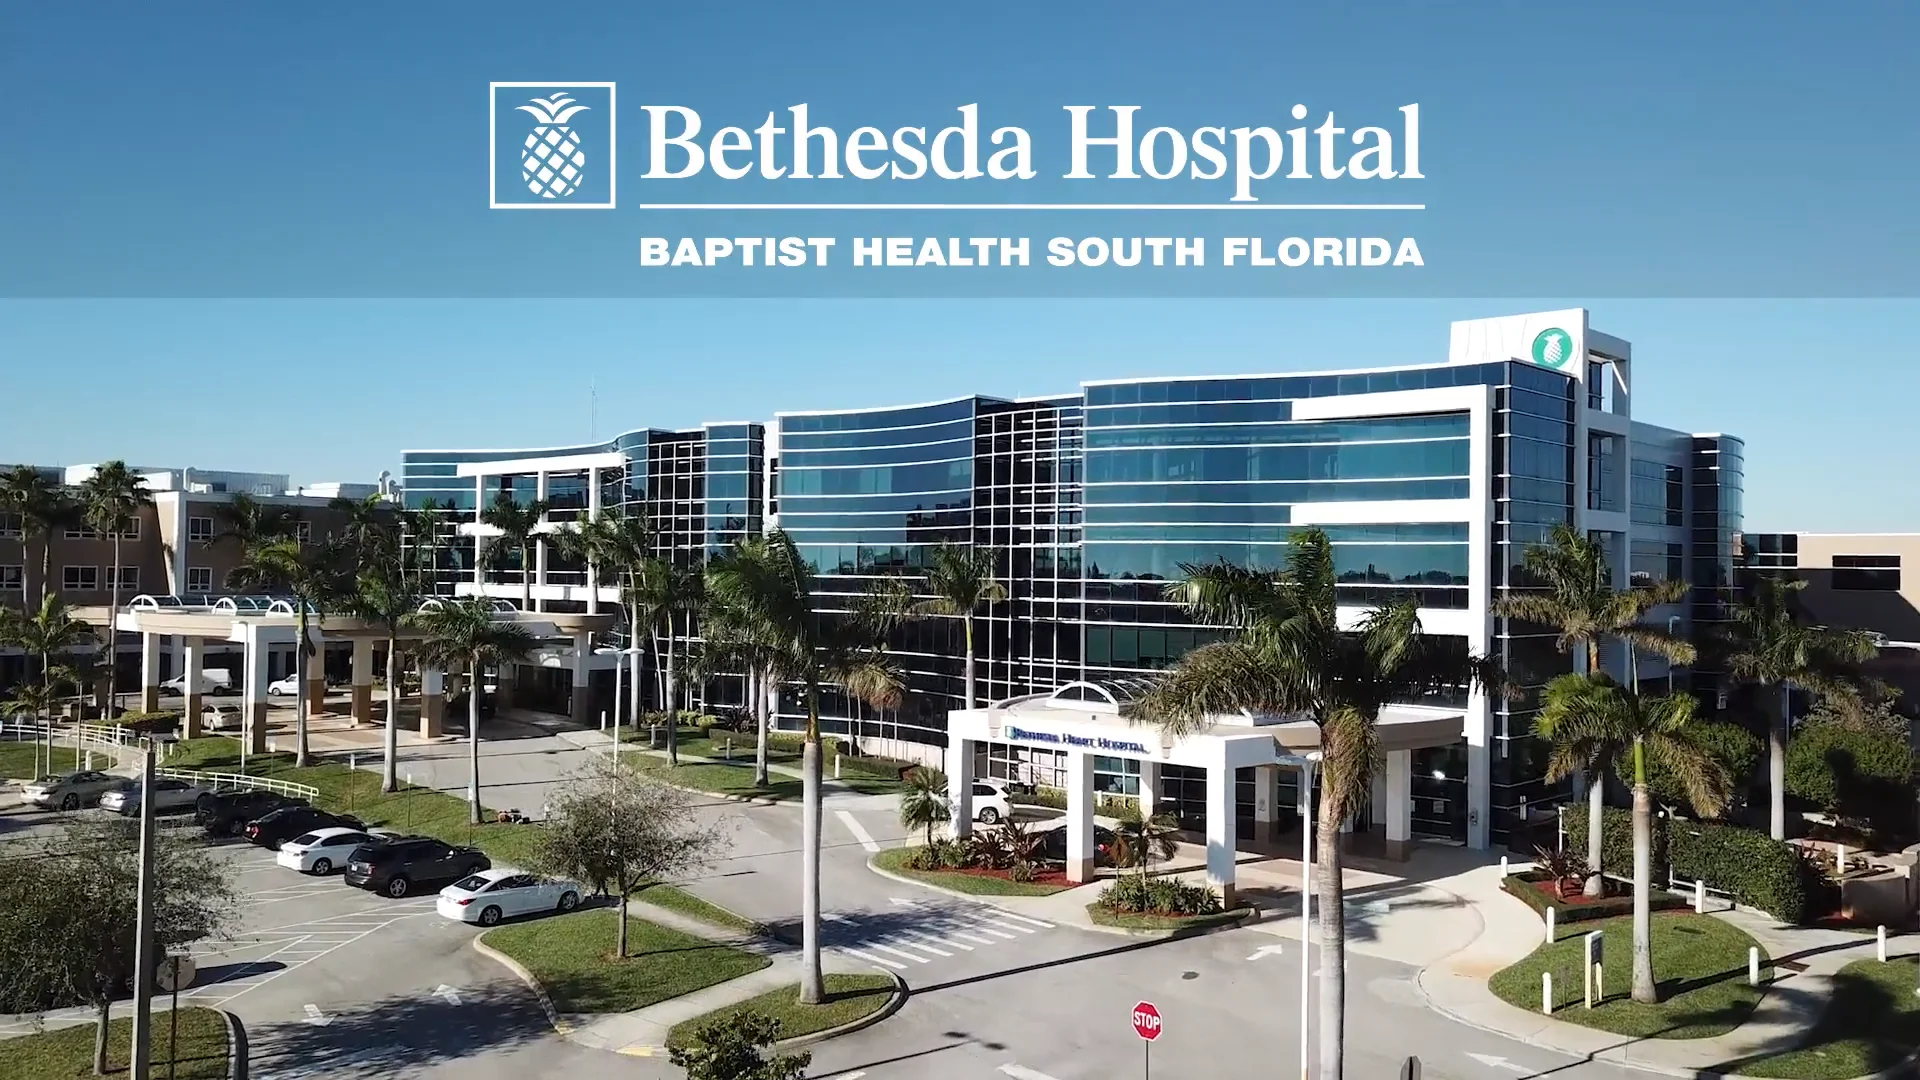 Bethesda Hospital Blum Pavilion Giving Society on Vimeo